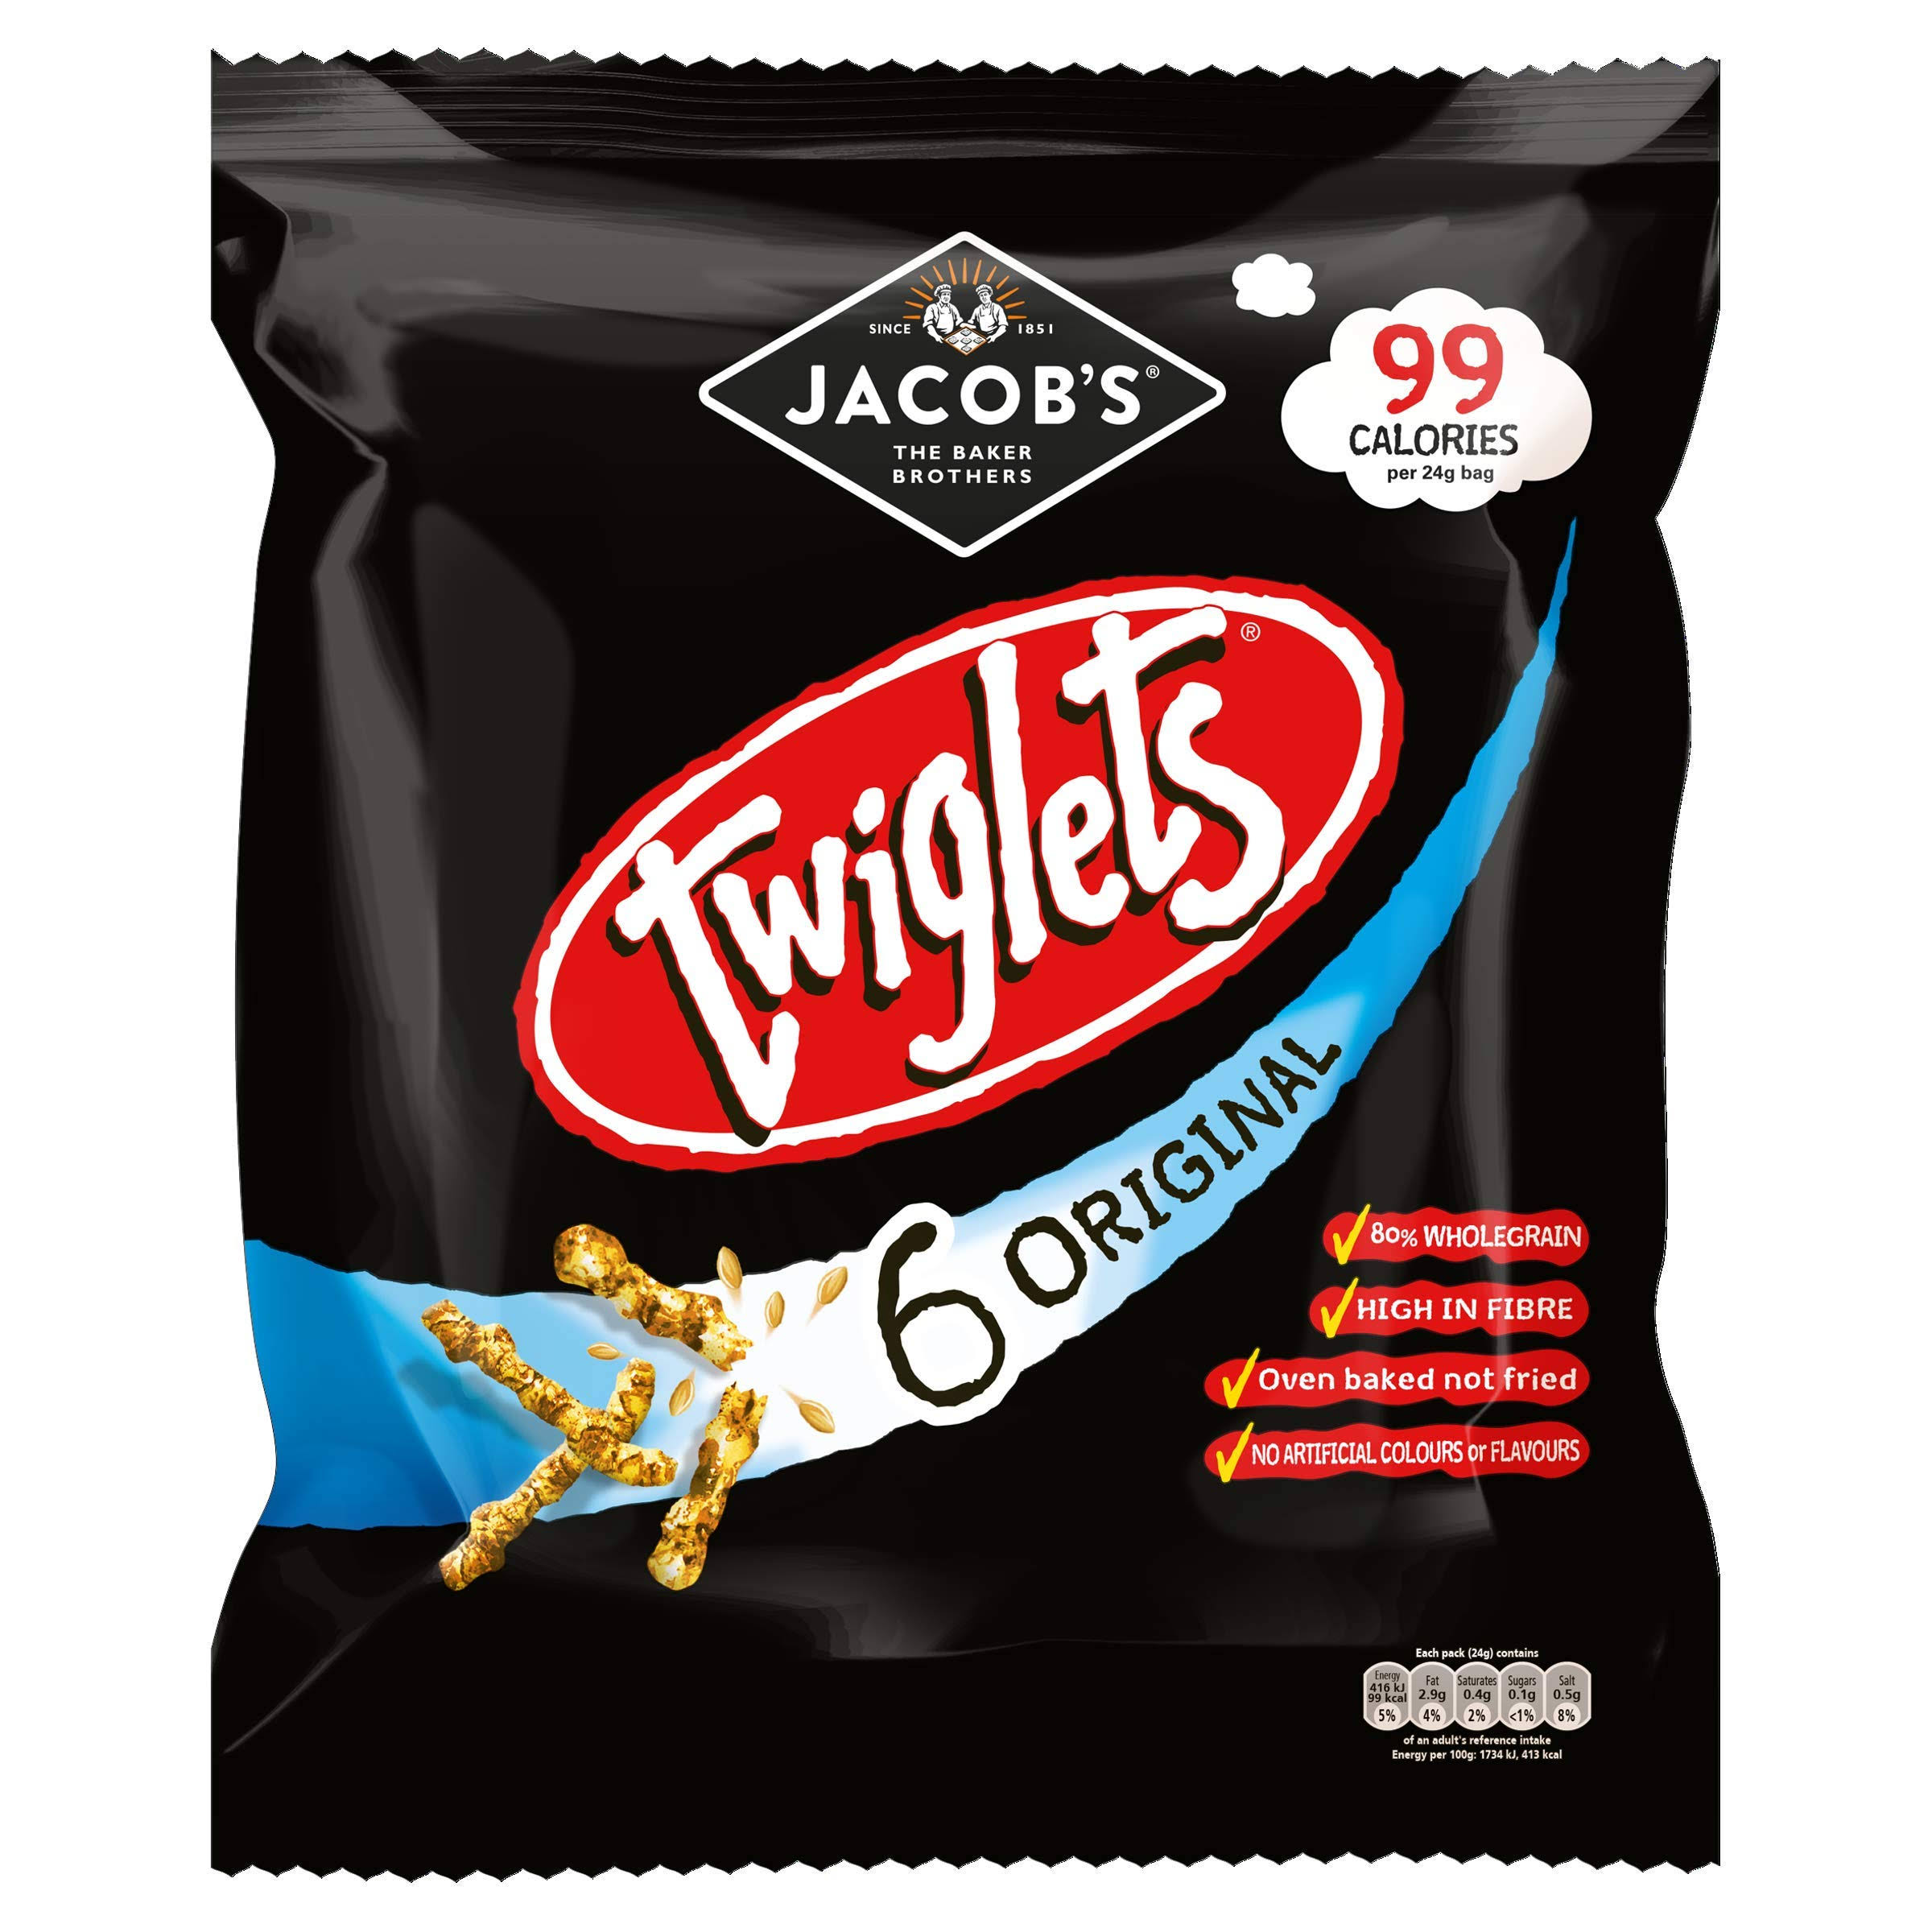 Jacob's Twiglets Snack - Original, 24g, 6pk